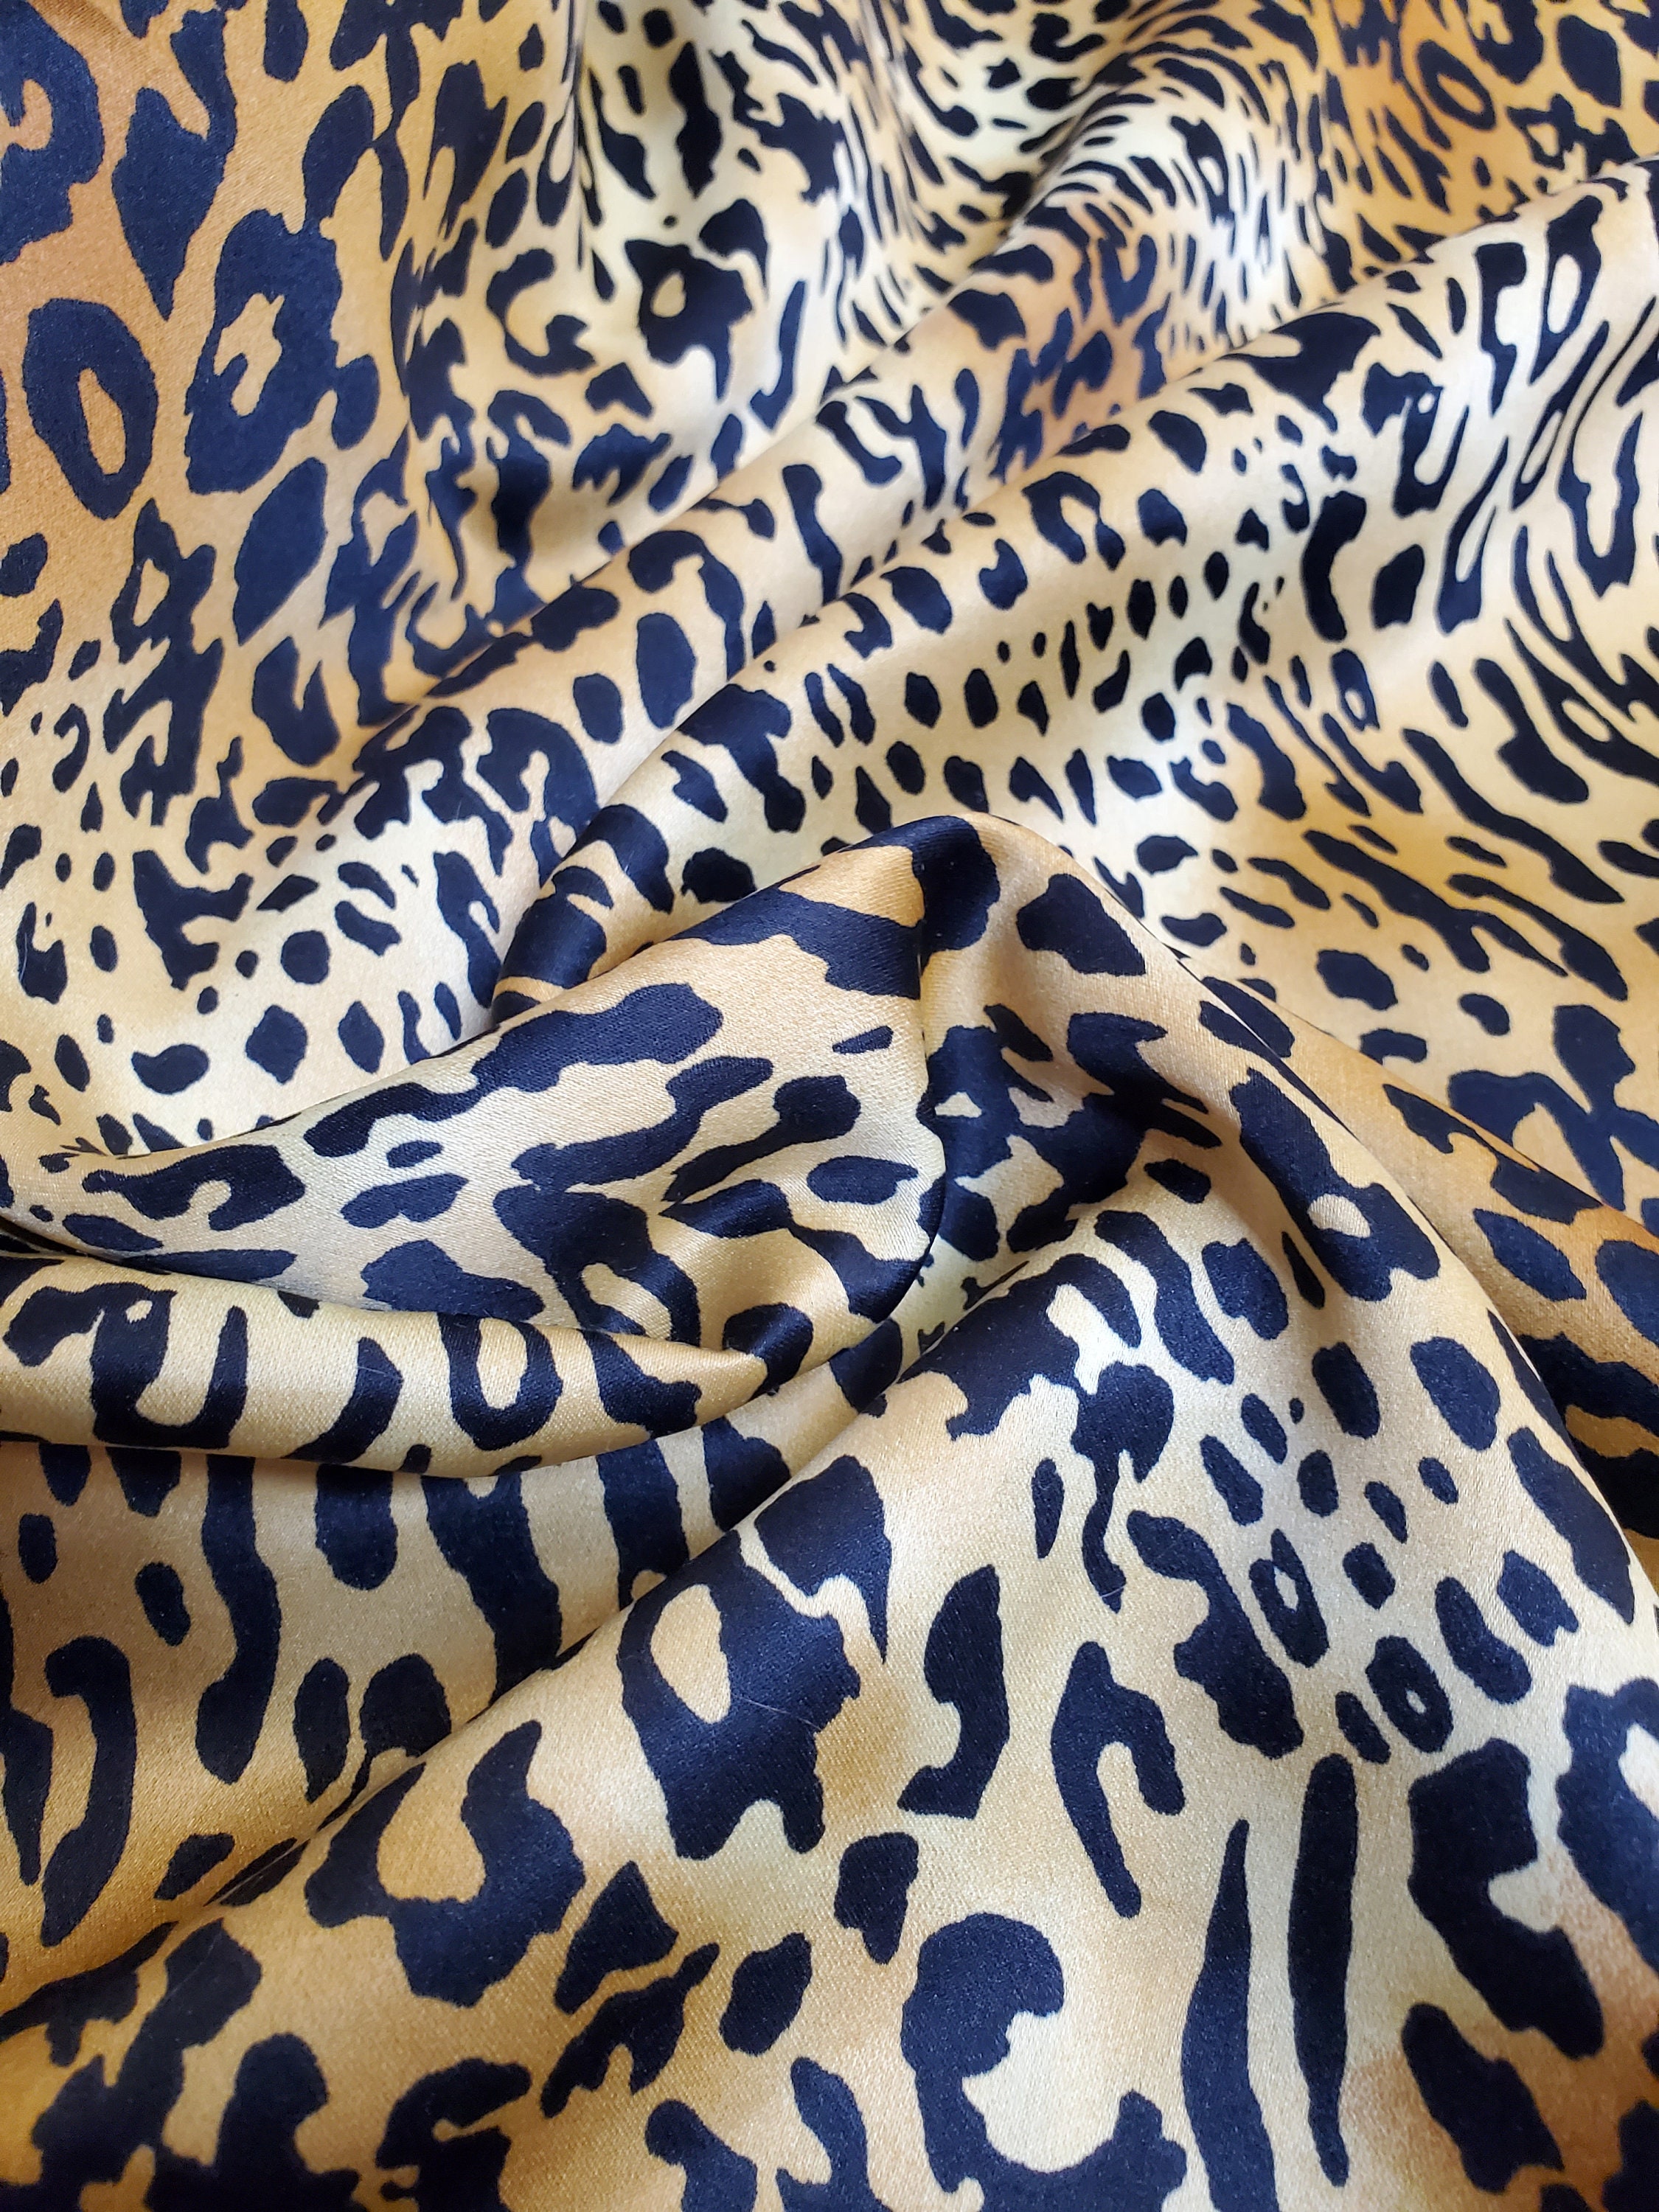 Cheetah Animal Print Charmeuse Satin Fabric Soft Hand Wild | Etsy